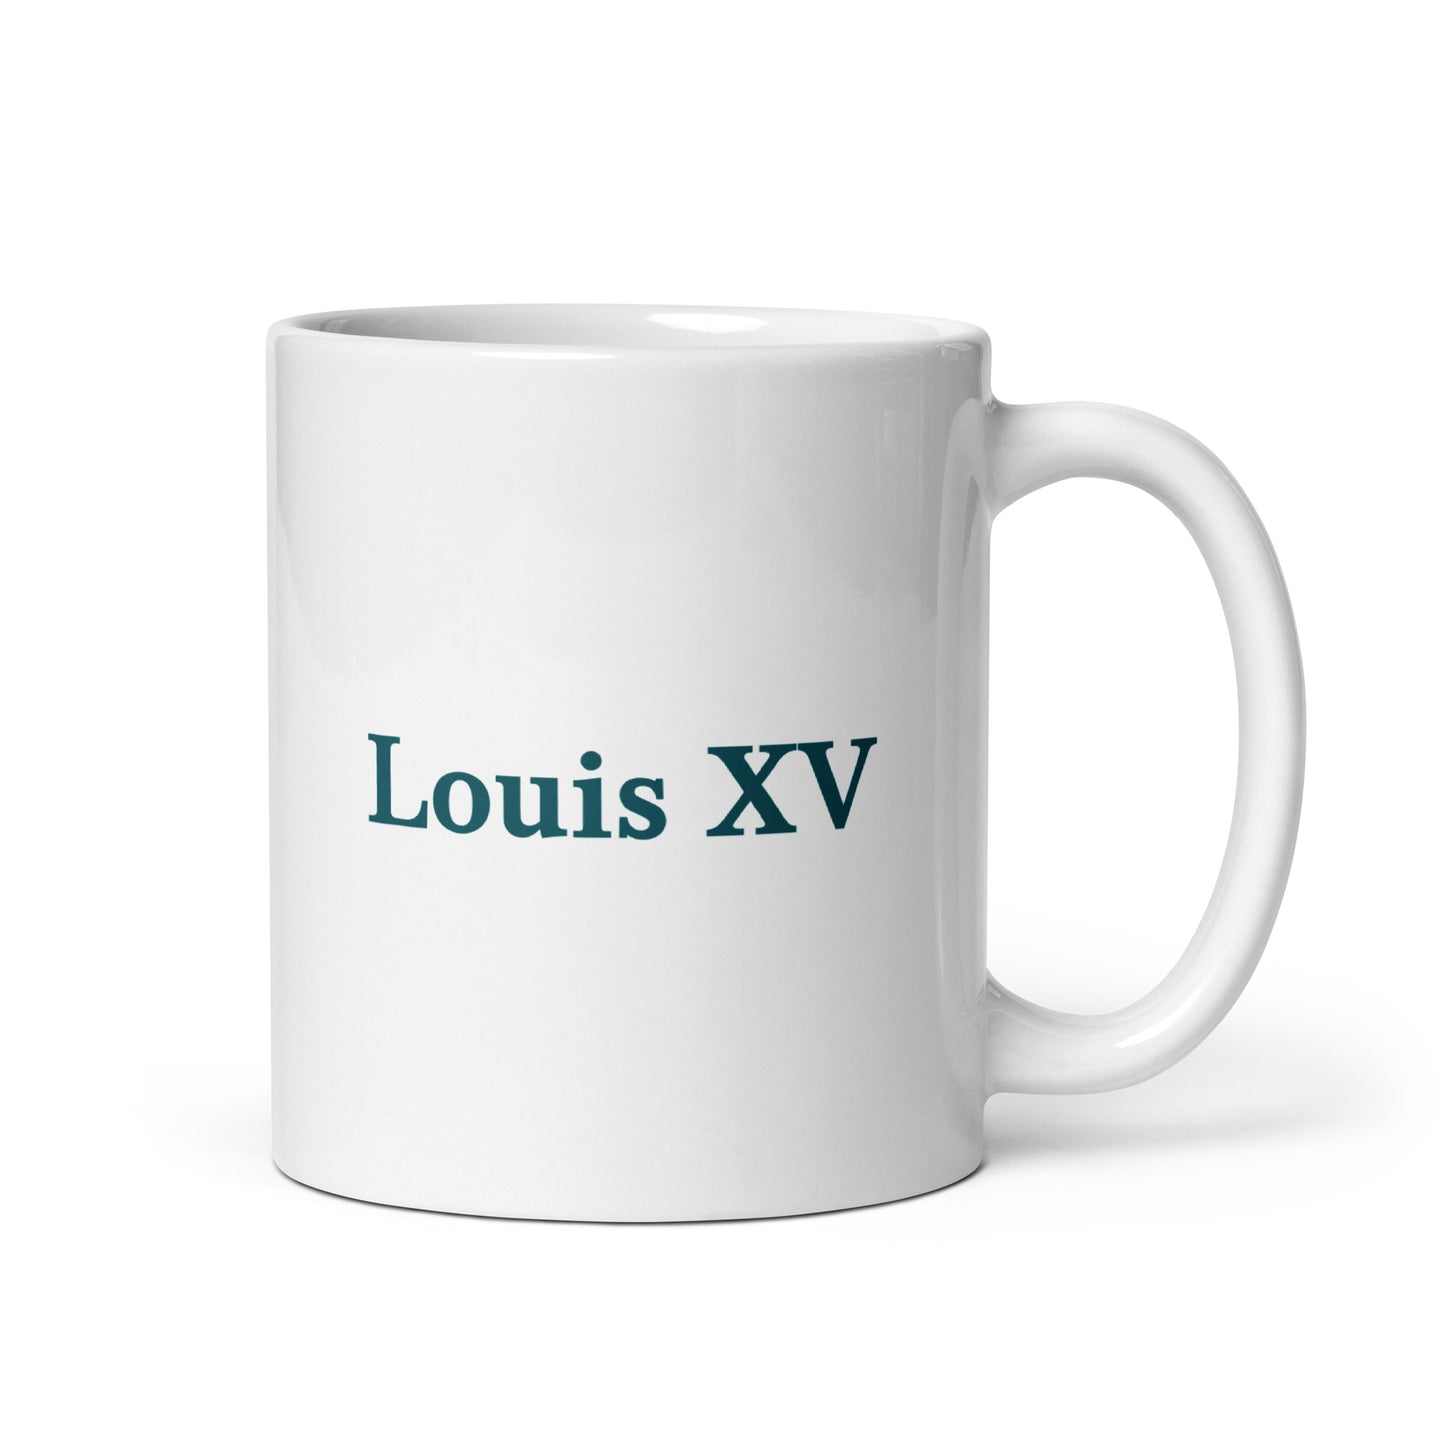 Louis XV white glossy mug